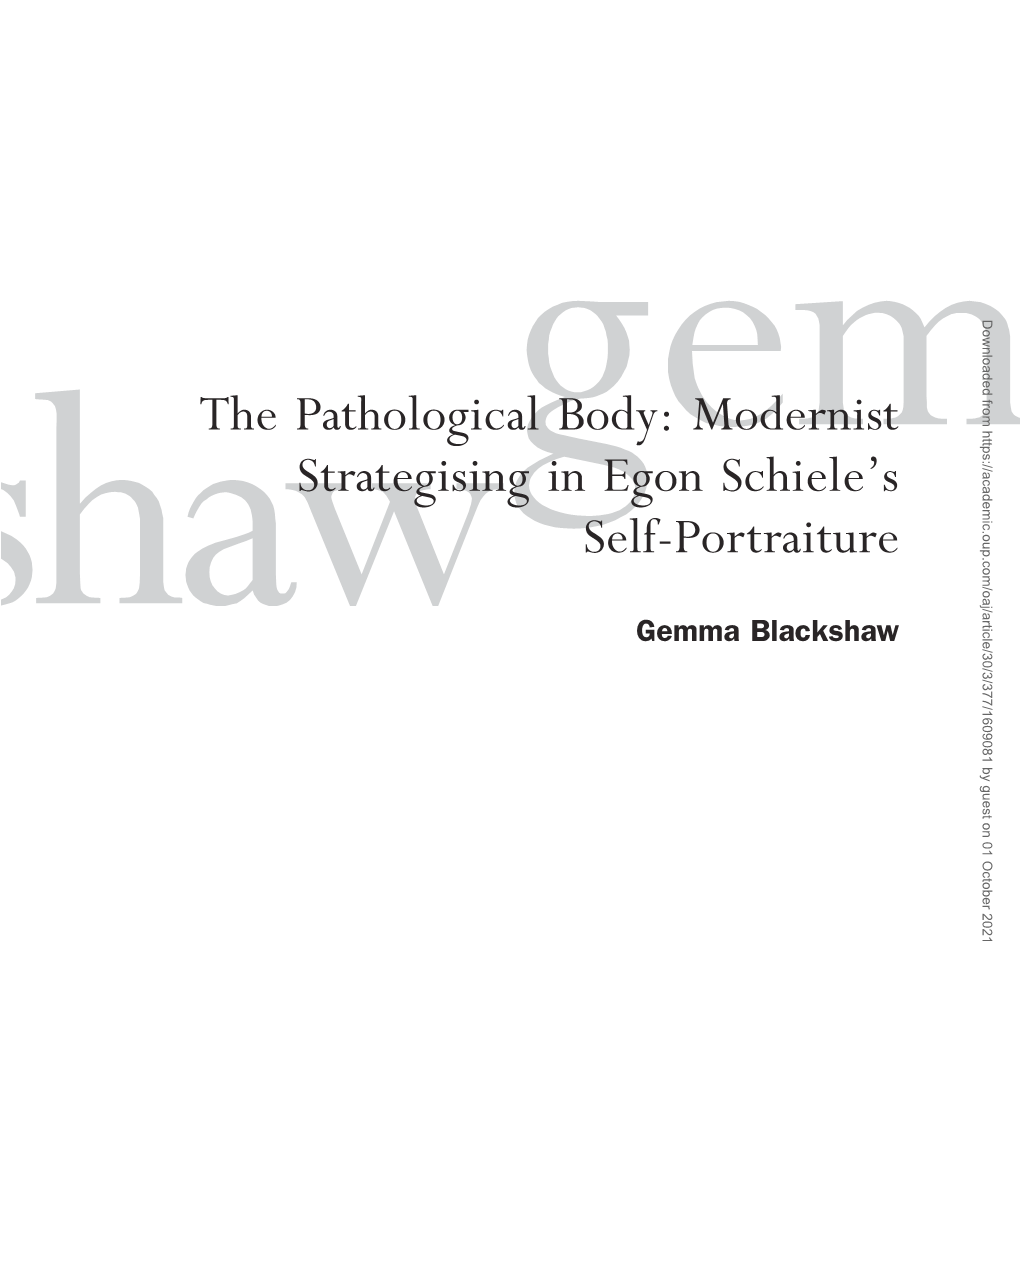 Modernist Strategising in Egon Schiele's Self-Portraiture